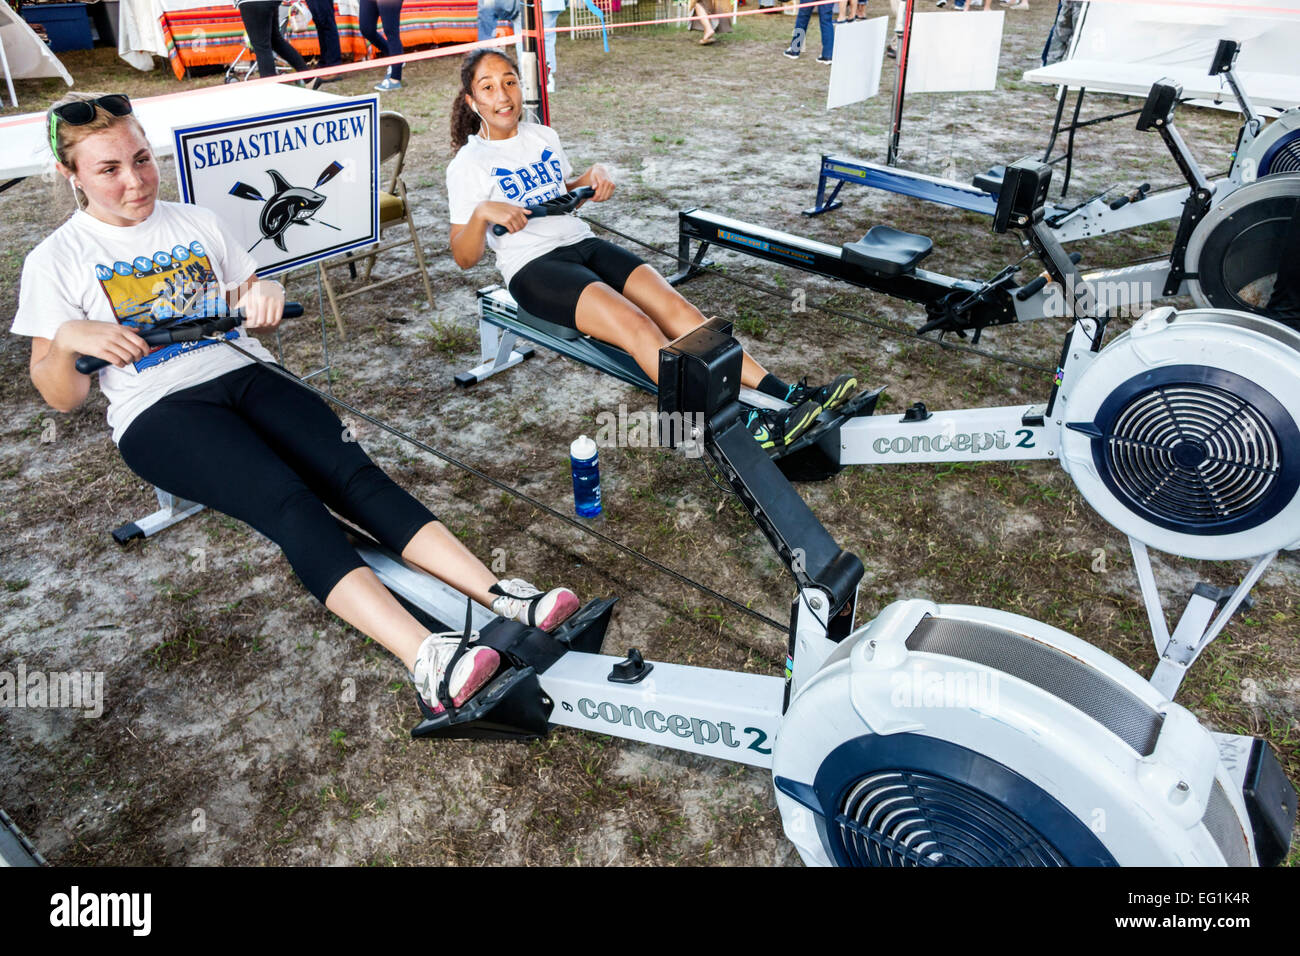 Florida Fellsmere,Frog Leg Festival,Sebastian Regional High School rowing crew members,teen teens teenage teenager teenagers youth adolescent,girl gir Stock Photo